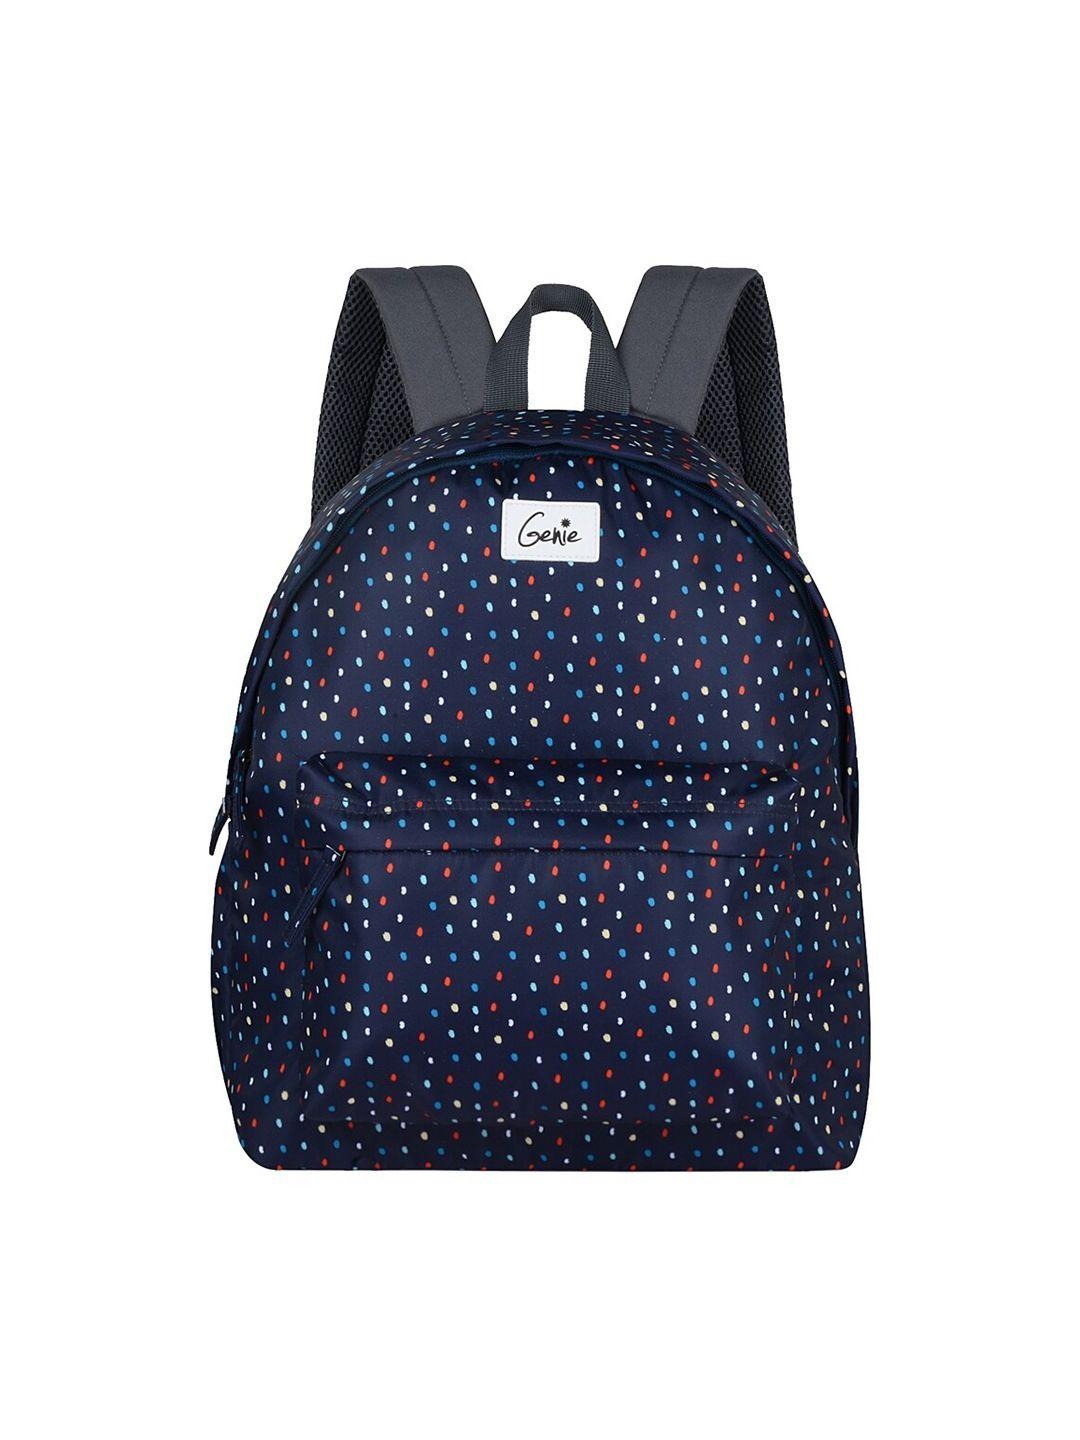 genie unisex graphic printed medium casual backpack -18l